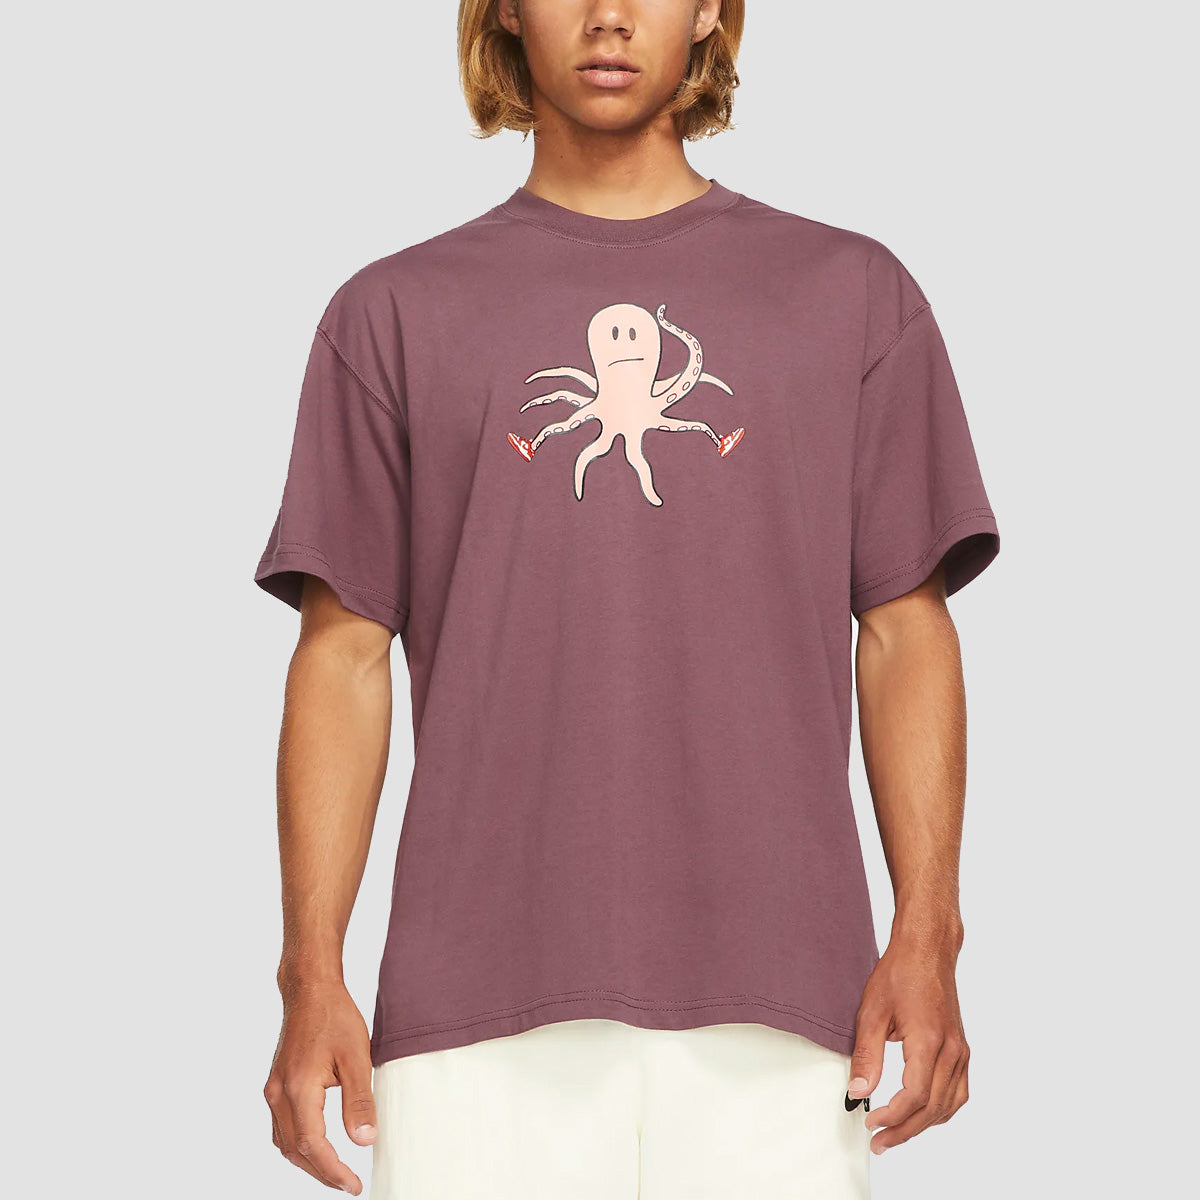 nike octopus t shirt